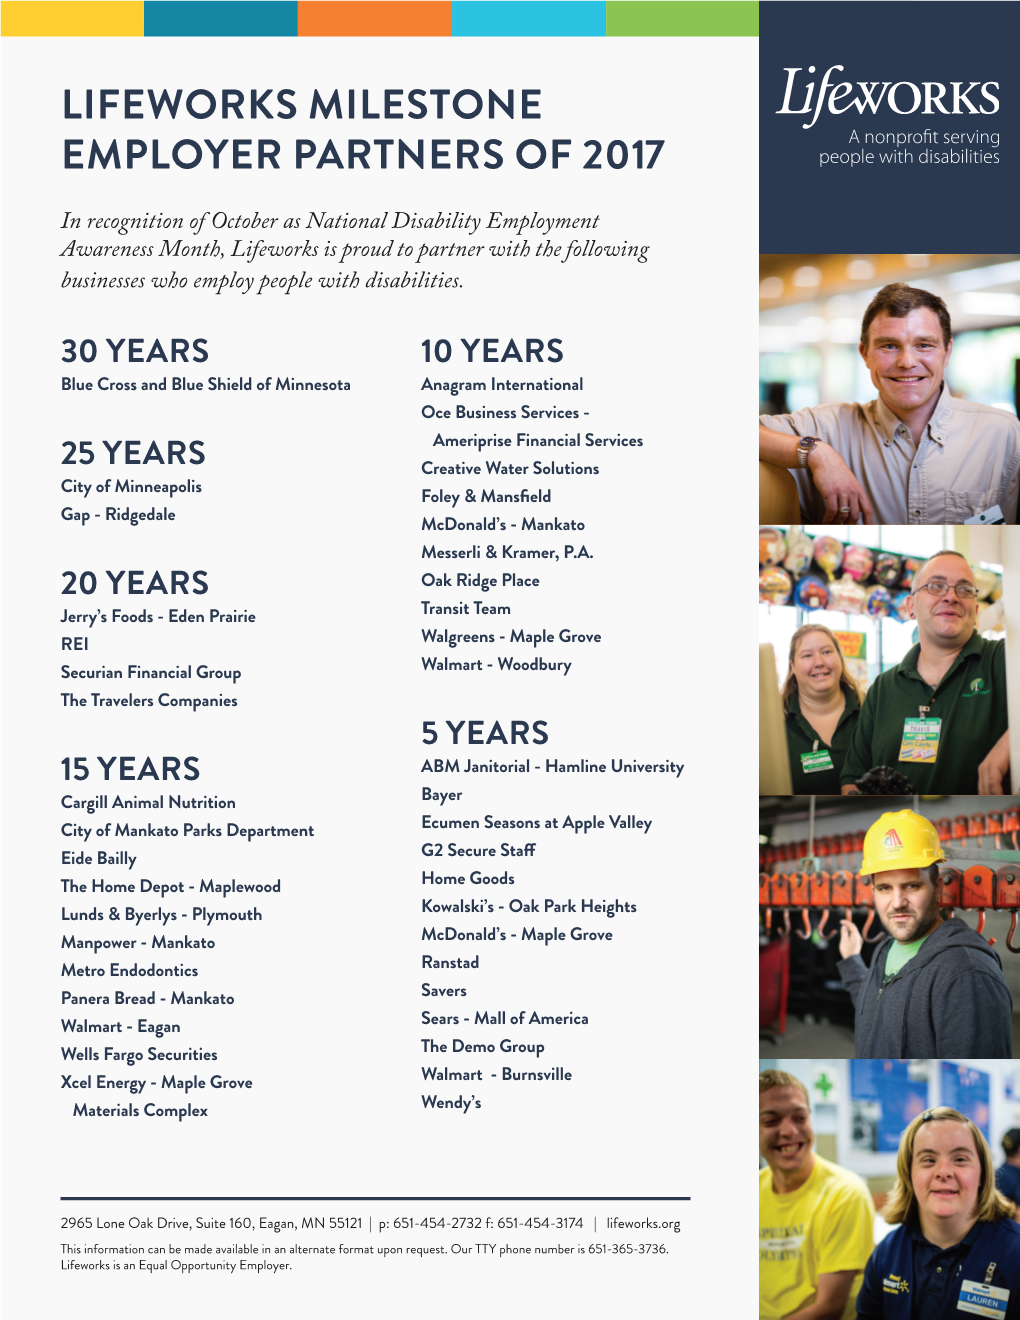 Lifeworks Milestone Employer Partners of 2017